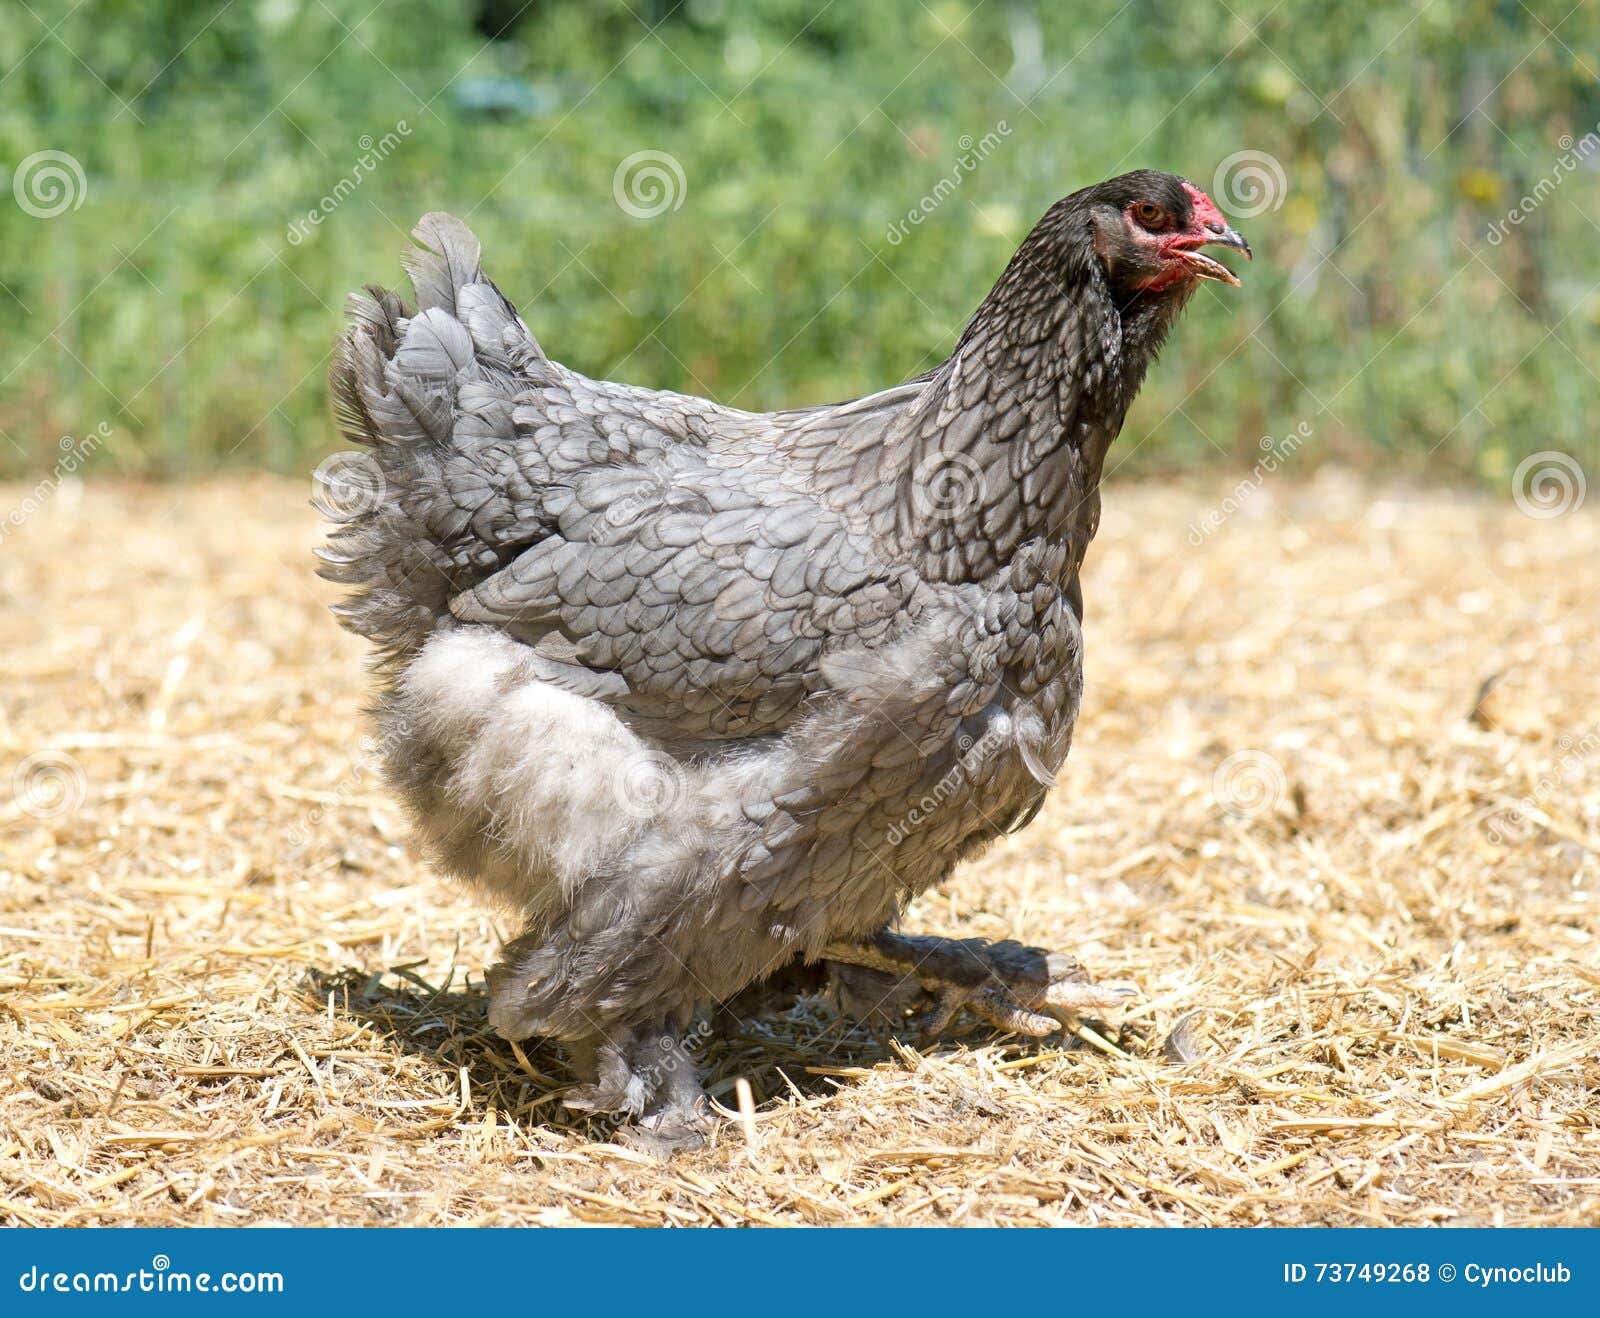 Grey brahma chicken stock photo. Image of bird, poultry - 73749268